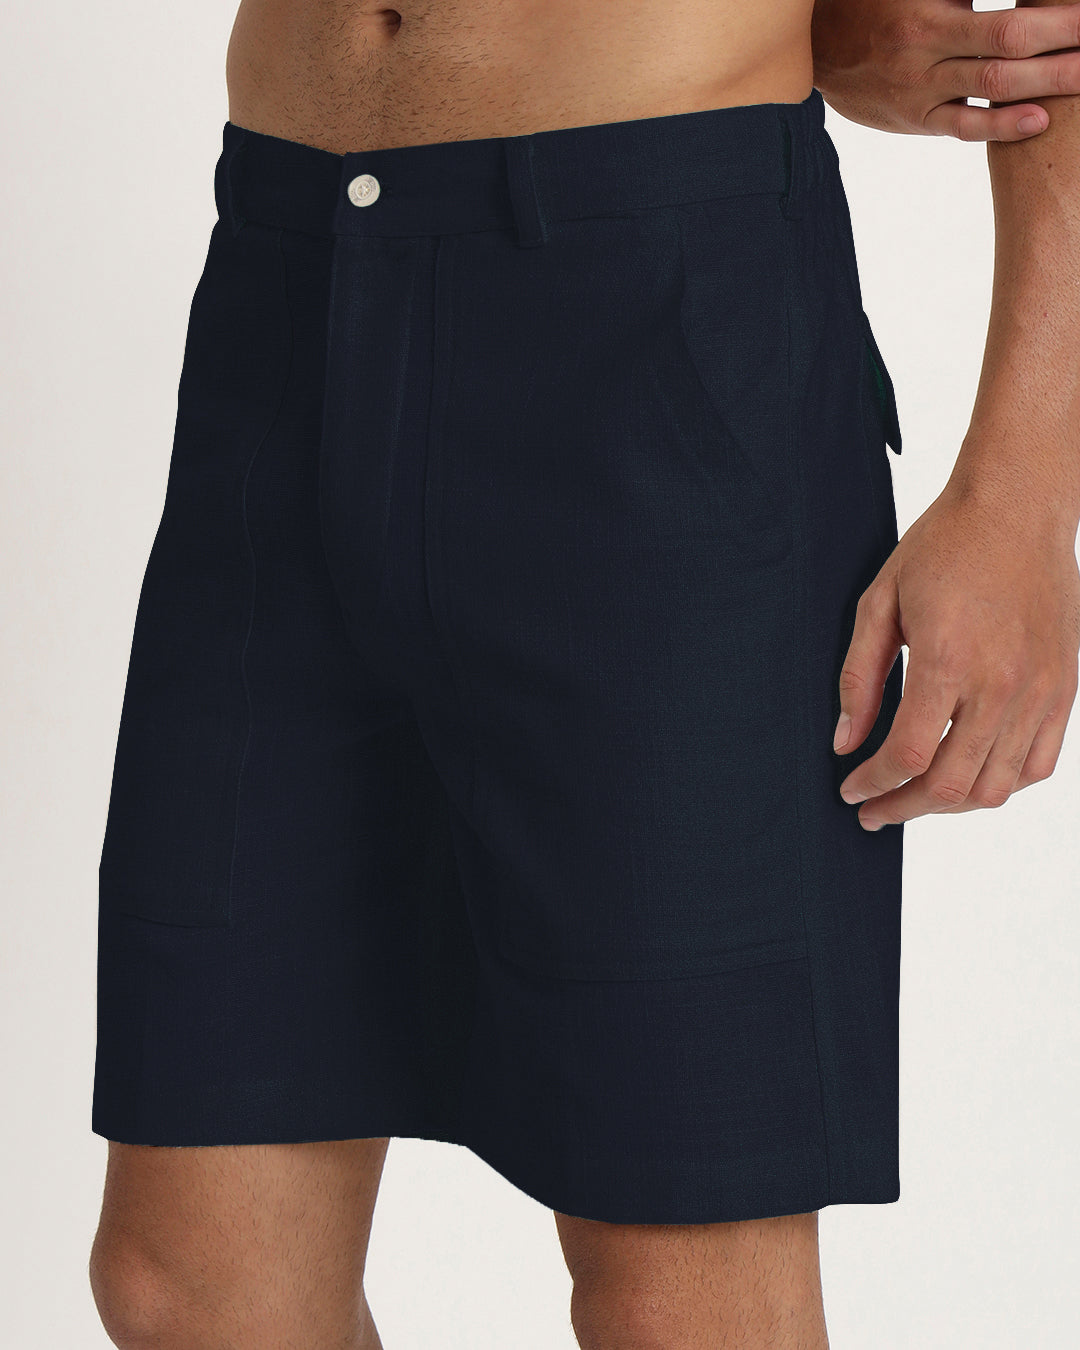 Combo : Patch Pocket Playtime Midnight Blue & Grey Men's Shorts